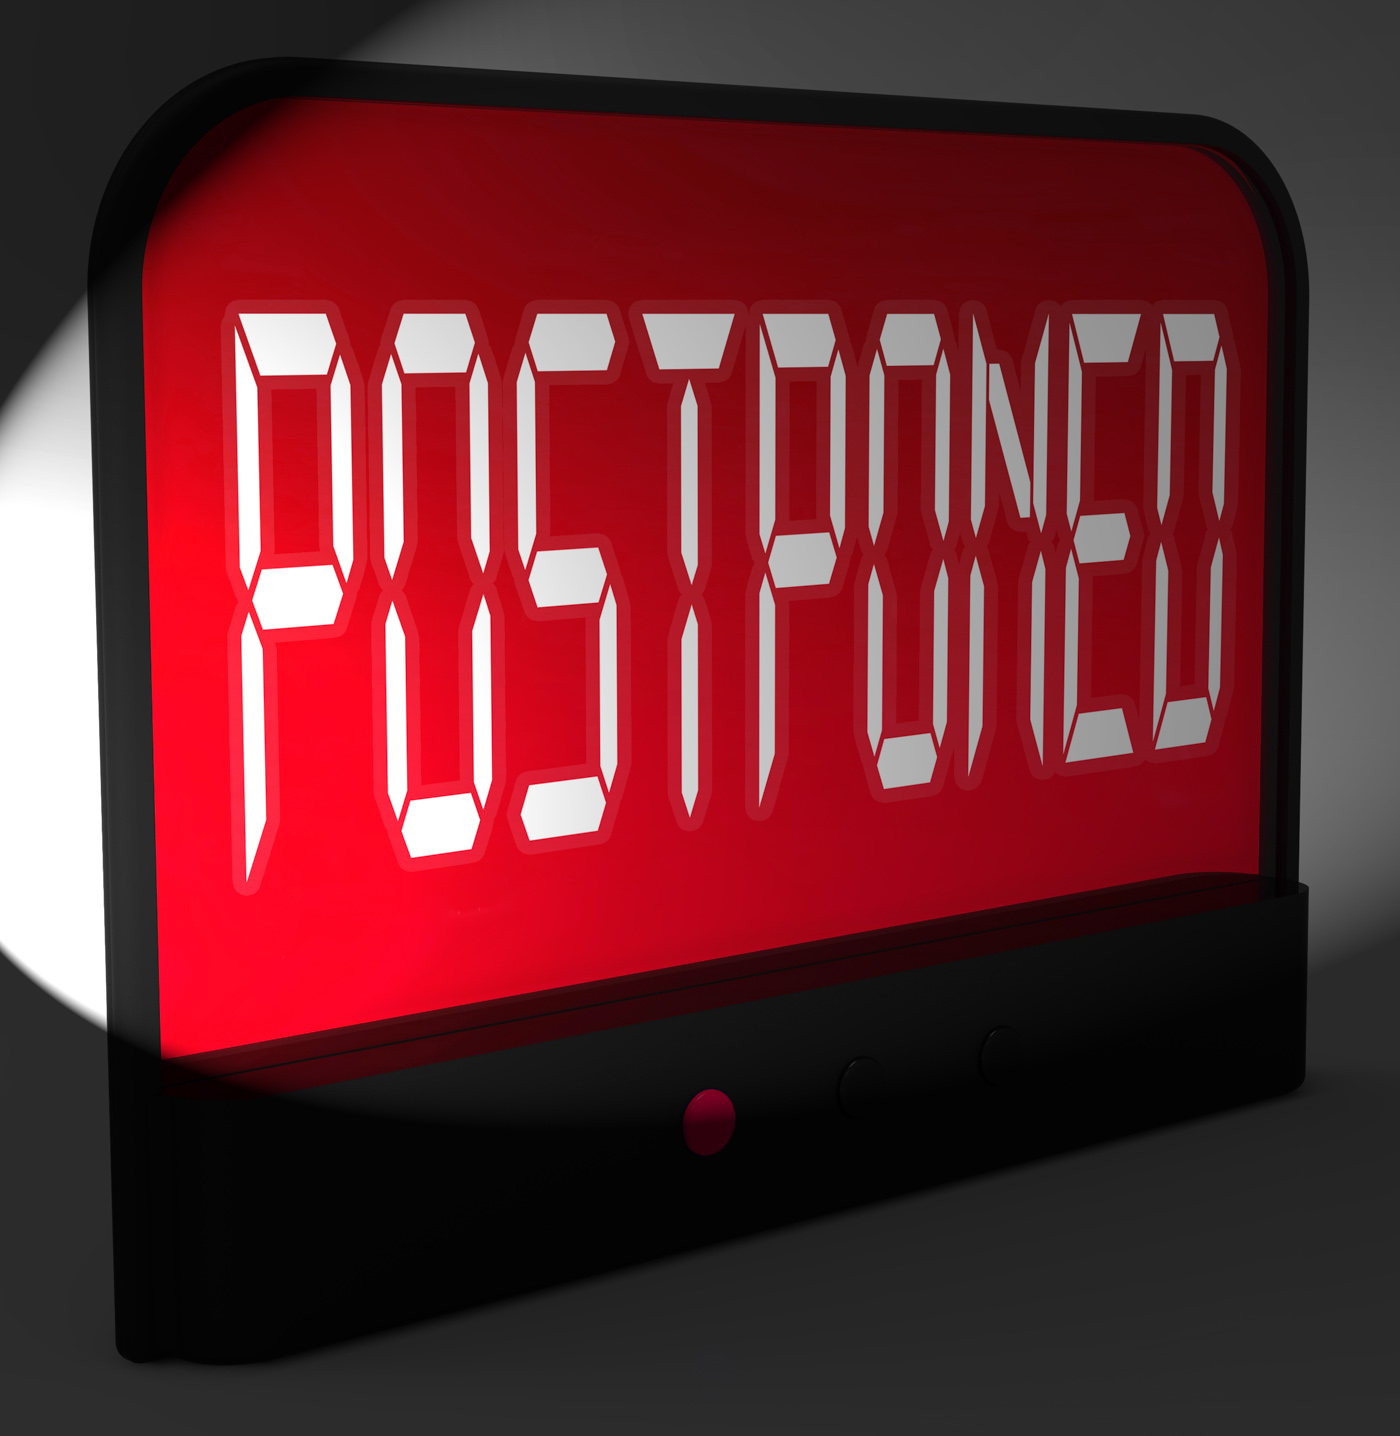 Postponed digital clock means delayed until later time photo